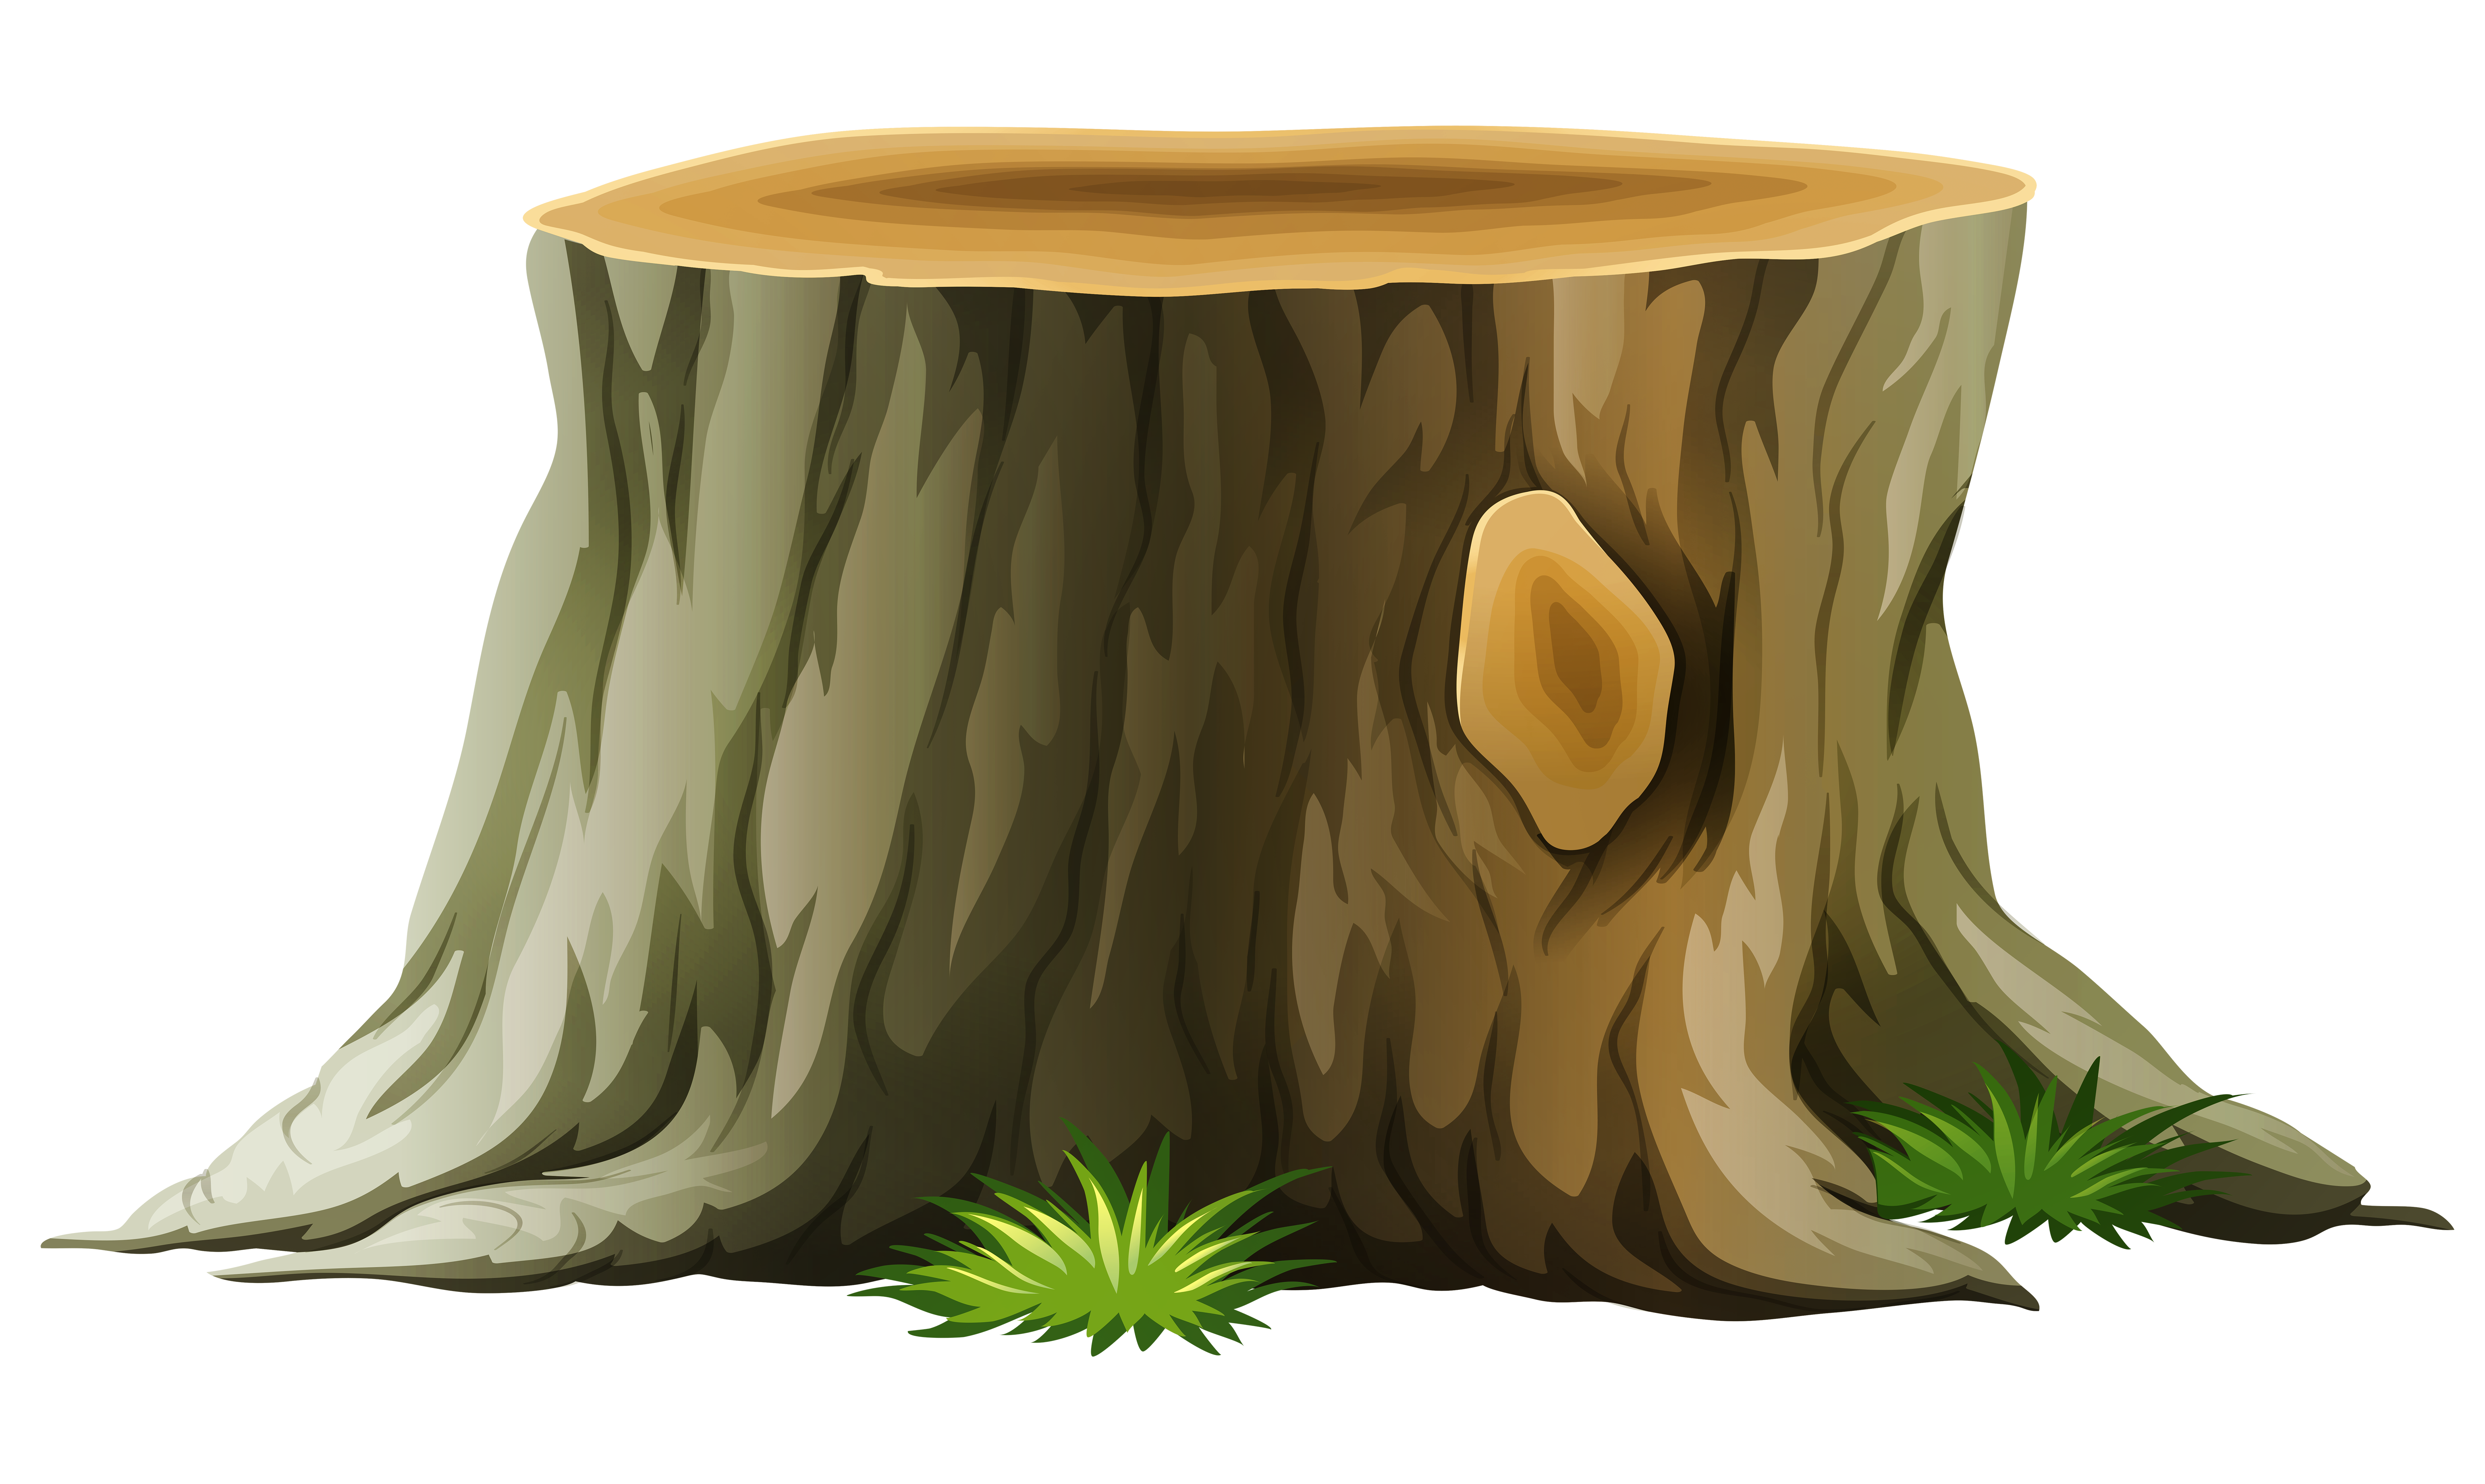 ... Tree stump, vector